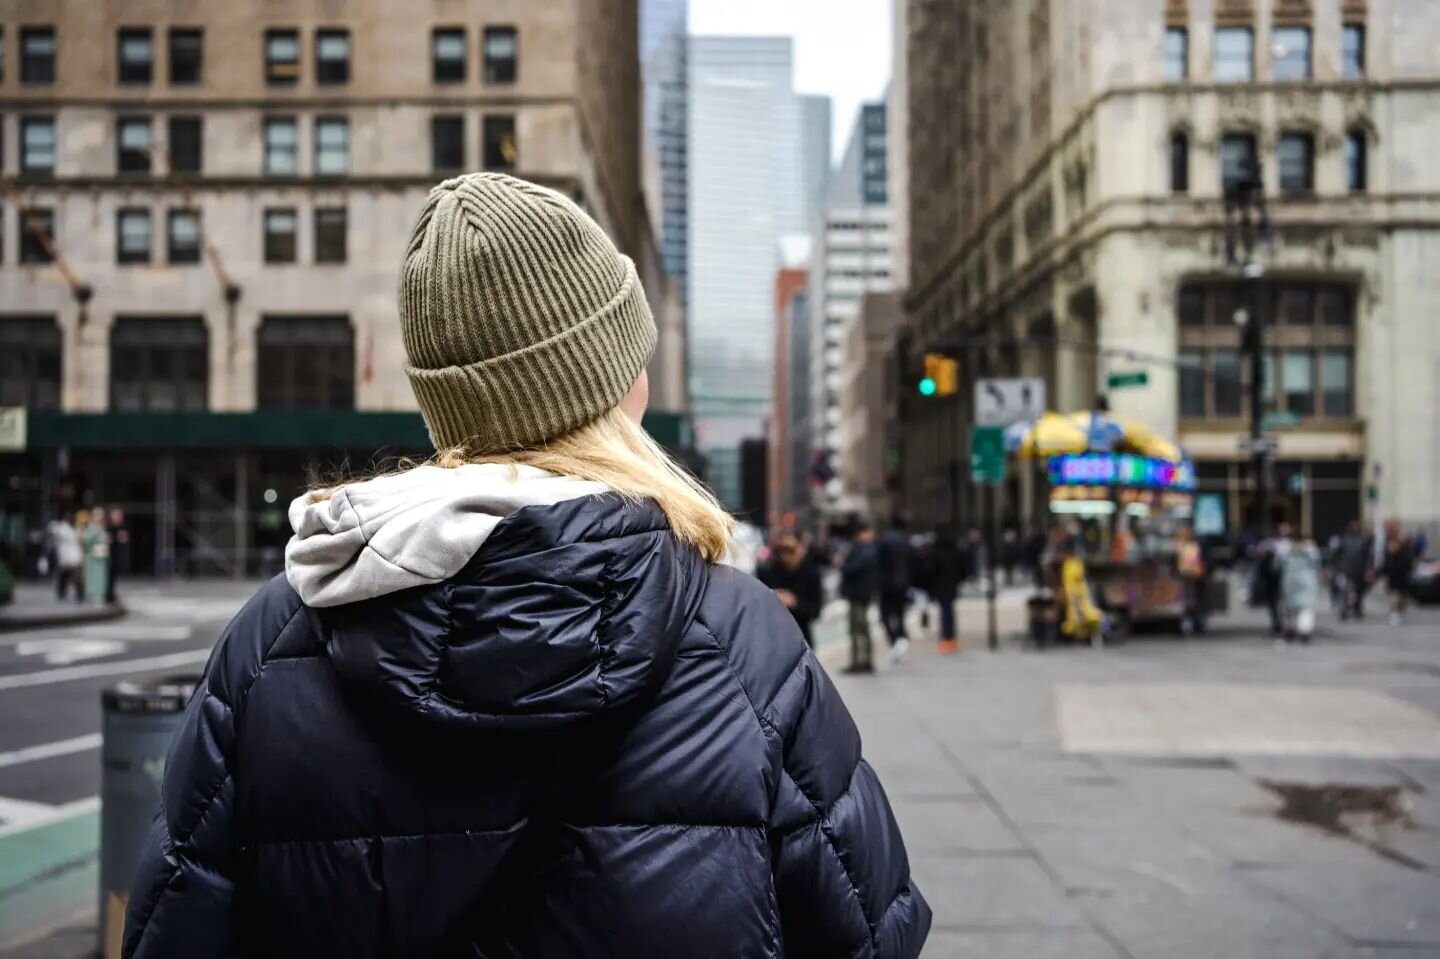 Midtown walks 🗽

#manhattan 
#newyorkphotography 
#newyorkstreetphotography 
#streetphotography 
#textures 
#puffycoats
#takemeback 
#nyc
#bigapple
#midtownmanhattan 
#newyorknewyork 
#walking 
#sonya7ii 
#afternoonstroll 
#35mmphotography 
#mood